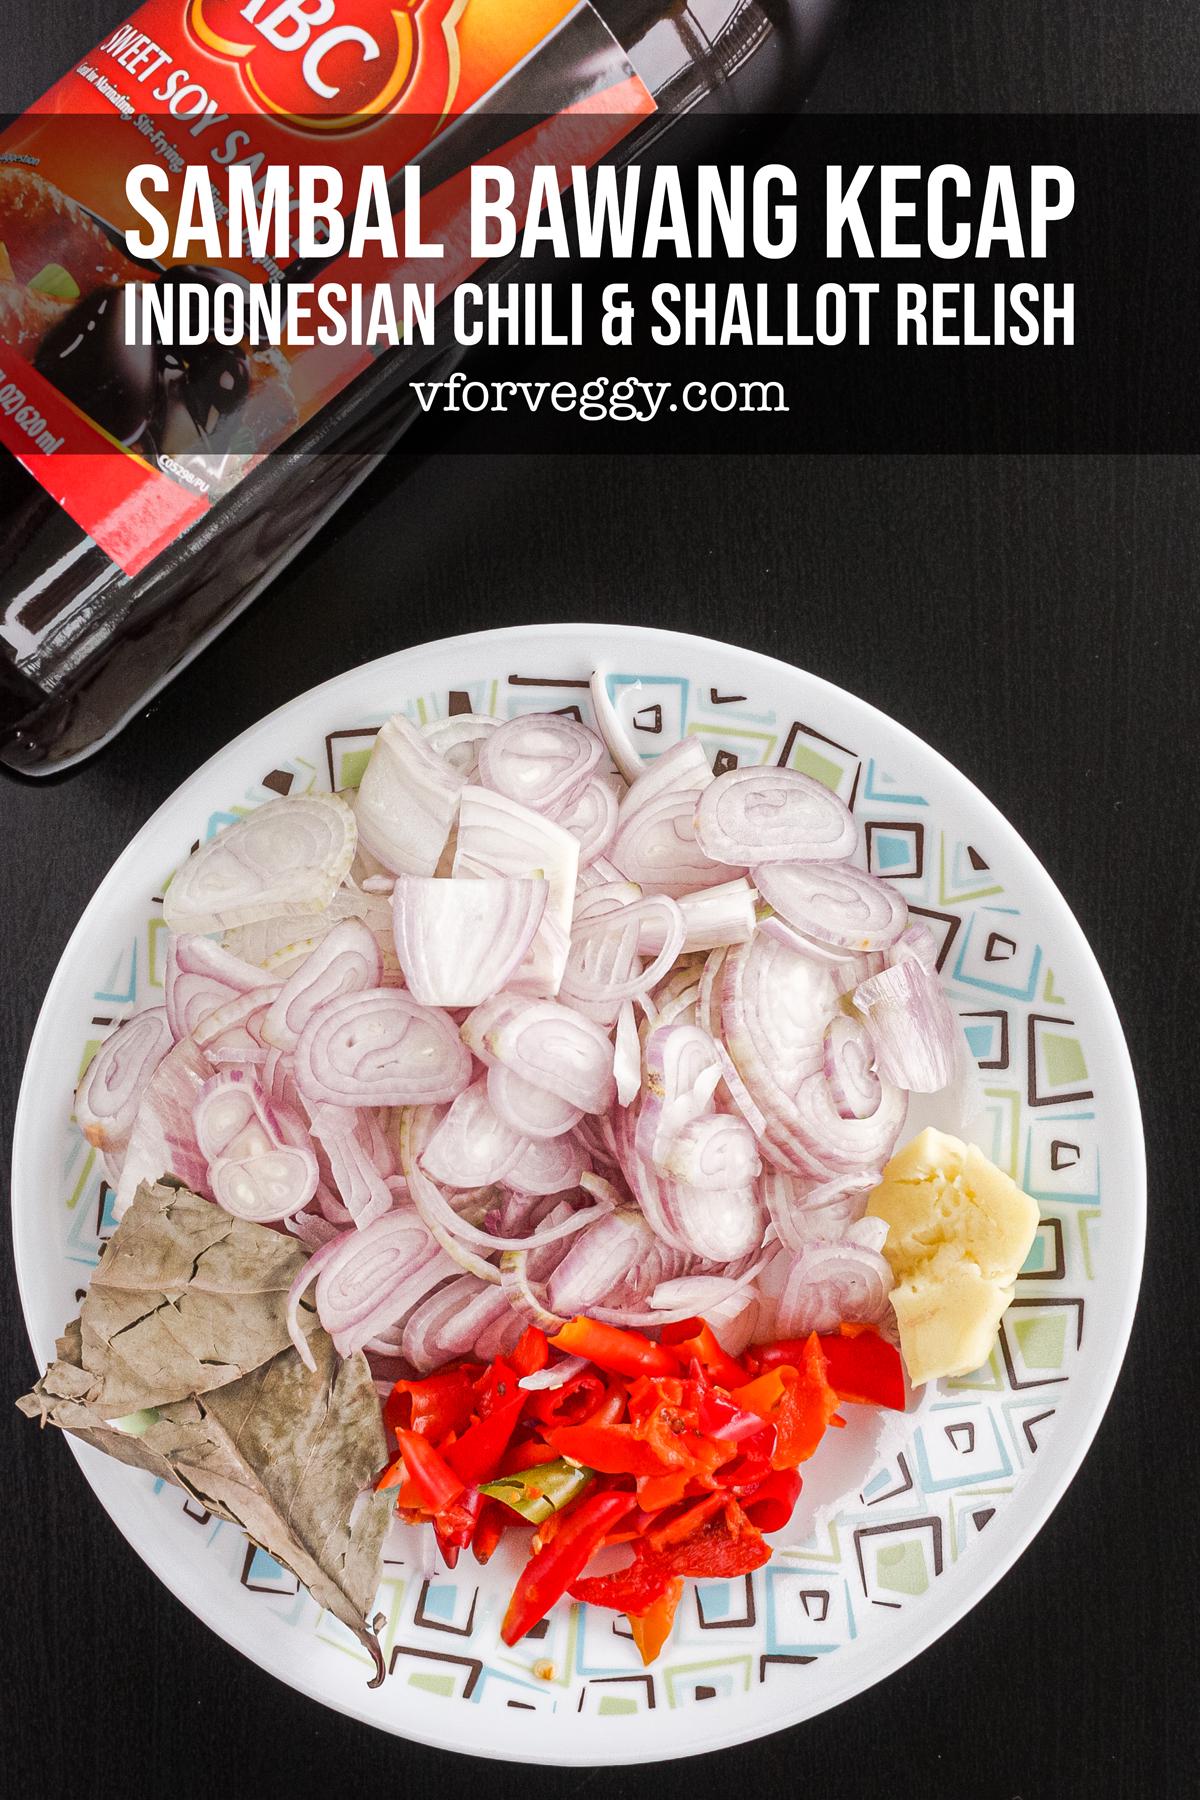 Ingredients to Prepare Sambal Bawang Kecap (Chili & Shallot Relish).